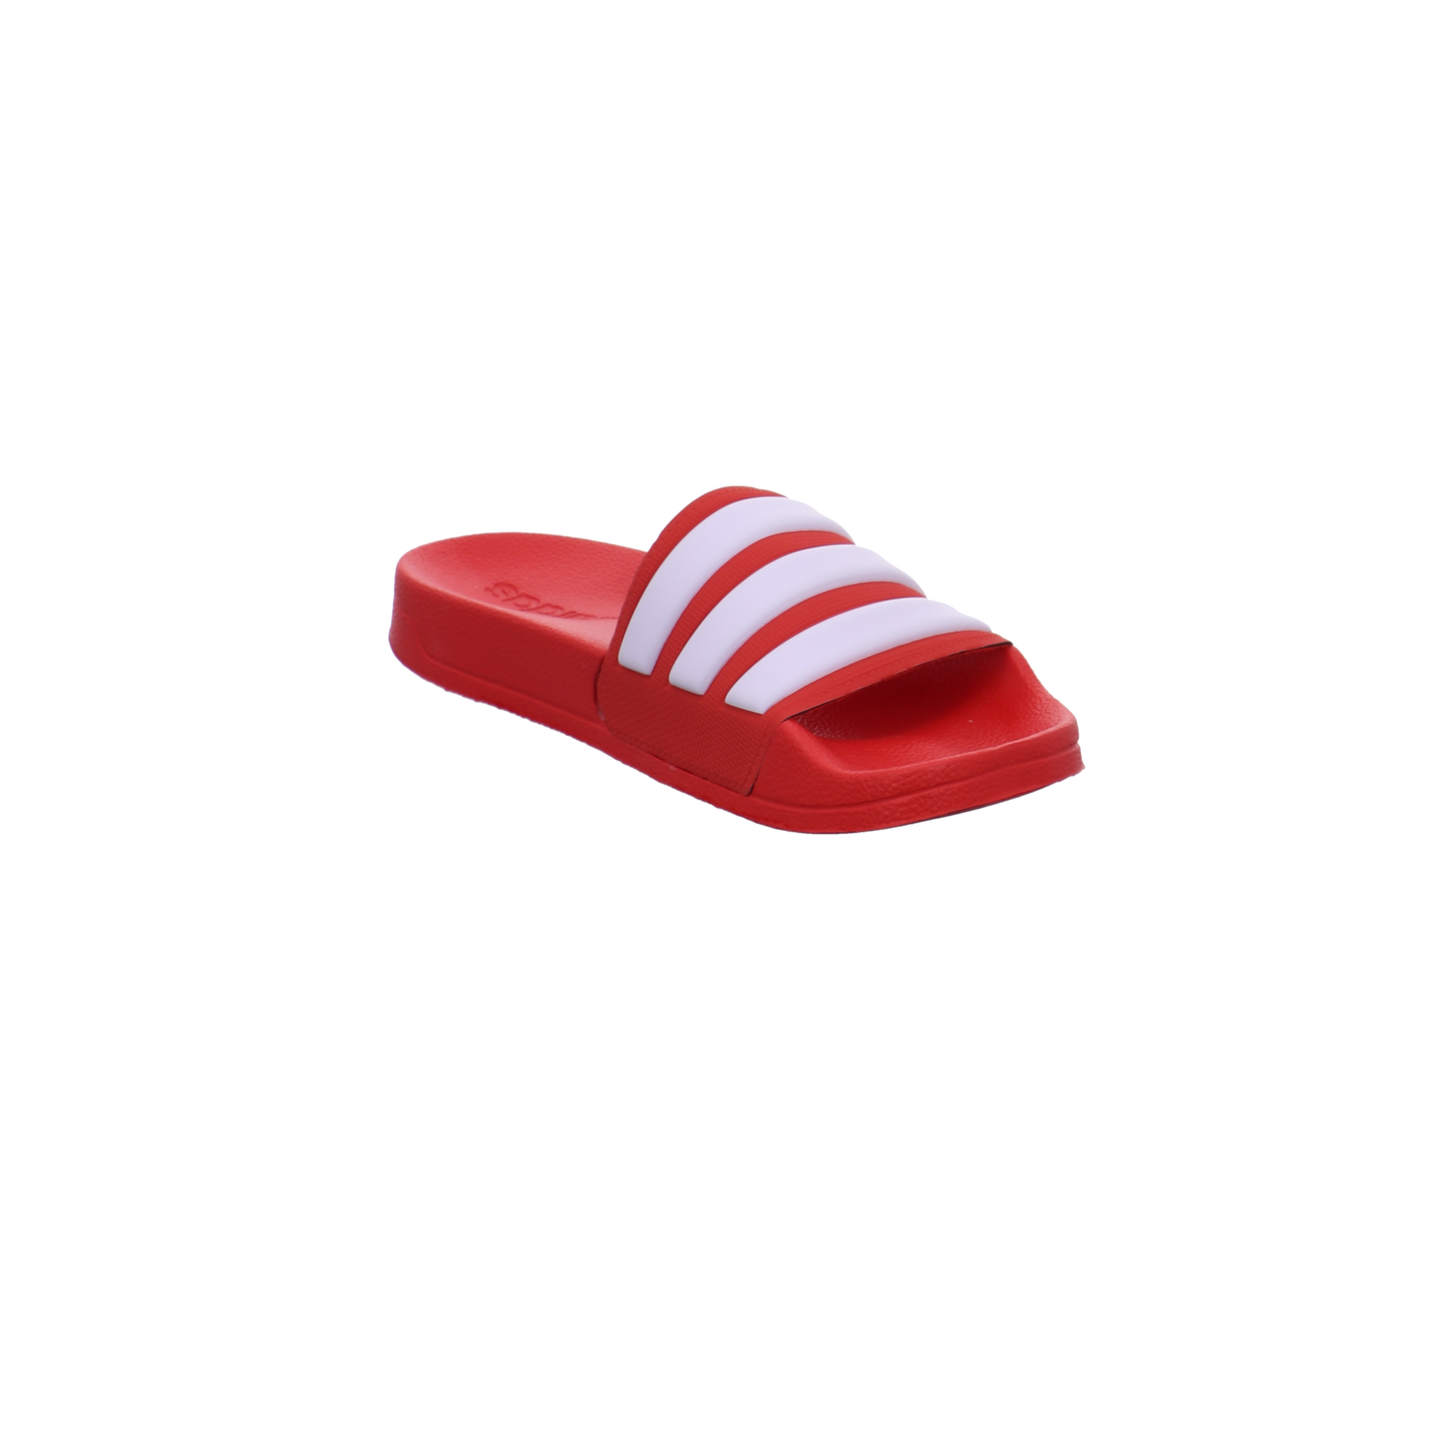 Adidas Schuhe  rot kombi Bild7